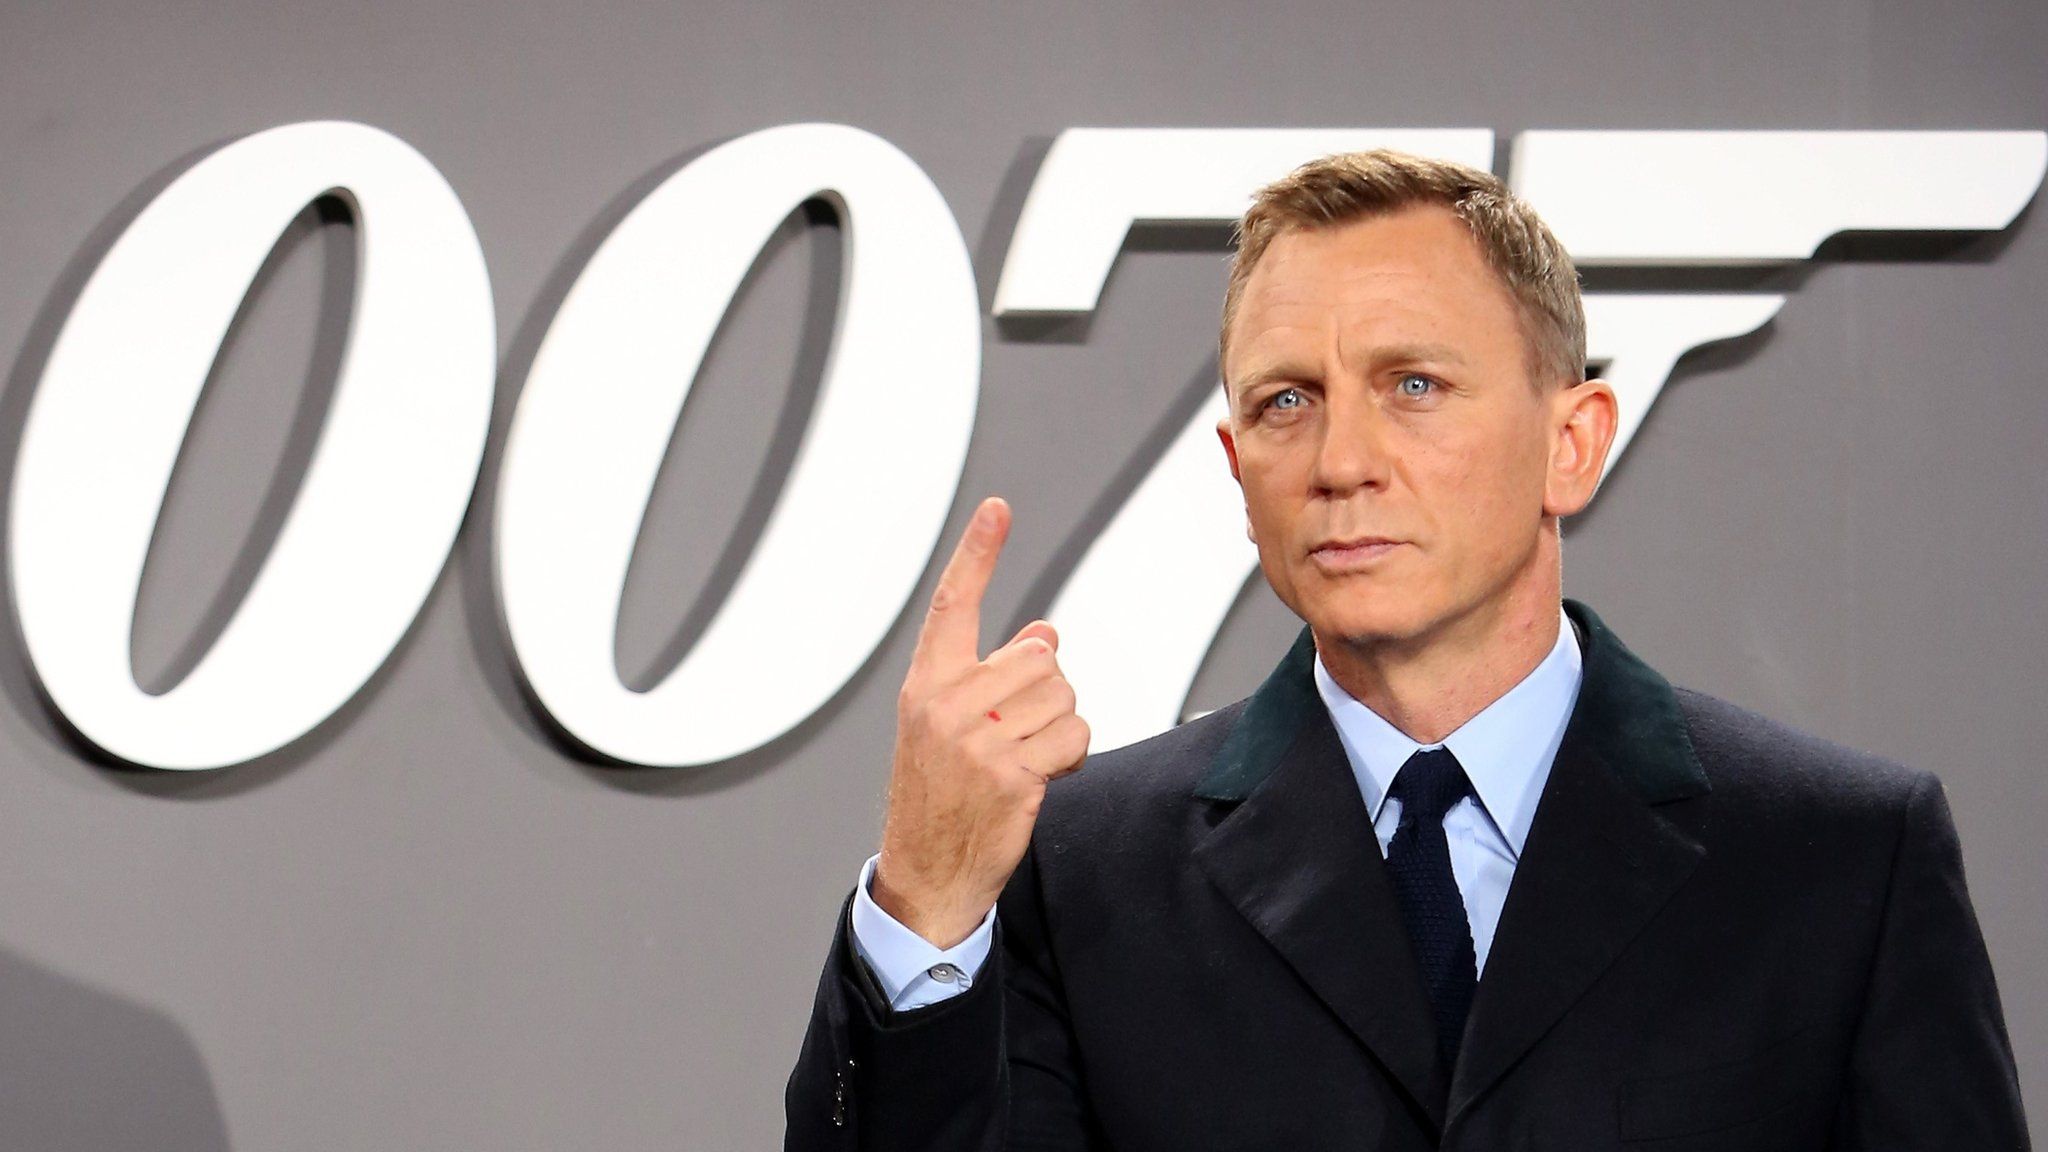 Daniel Craig promoting latest James Bond film Spectre